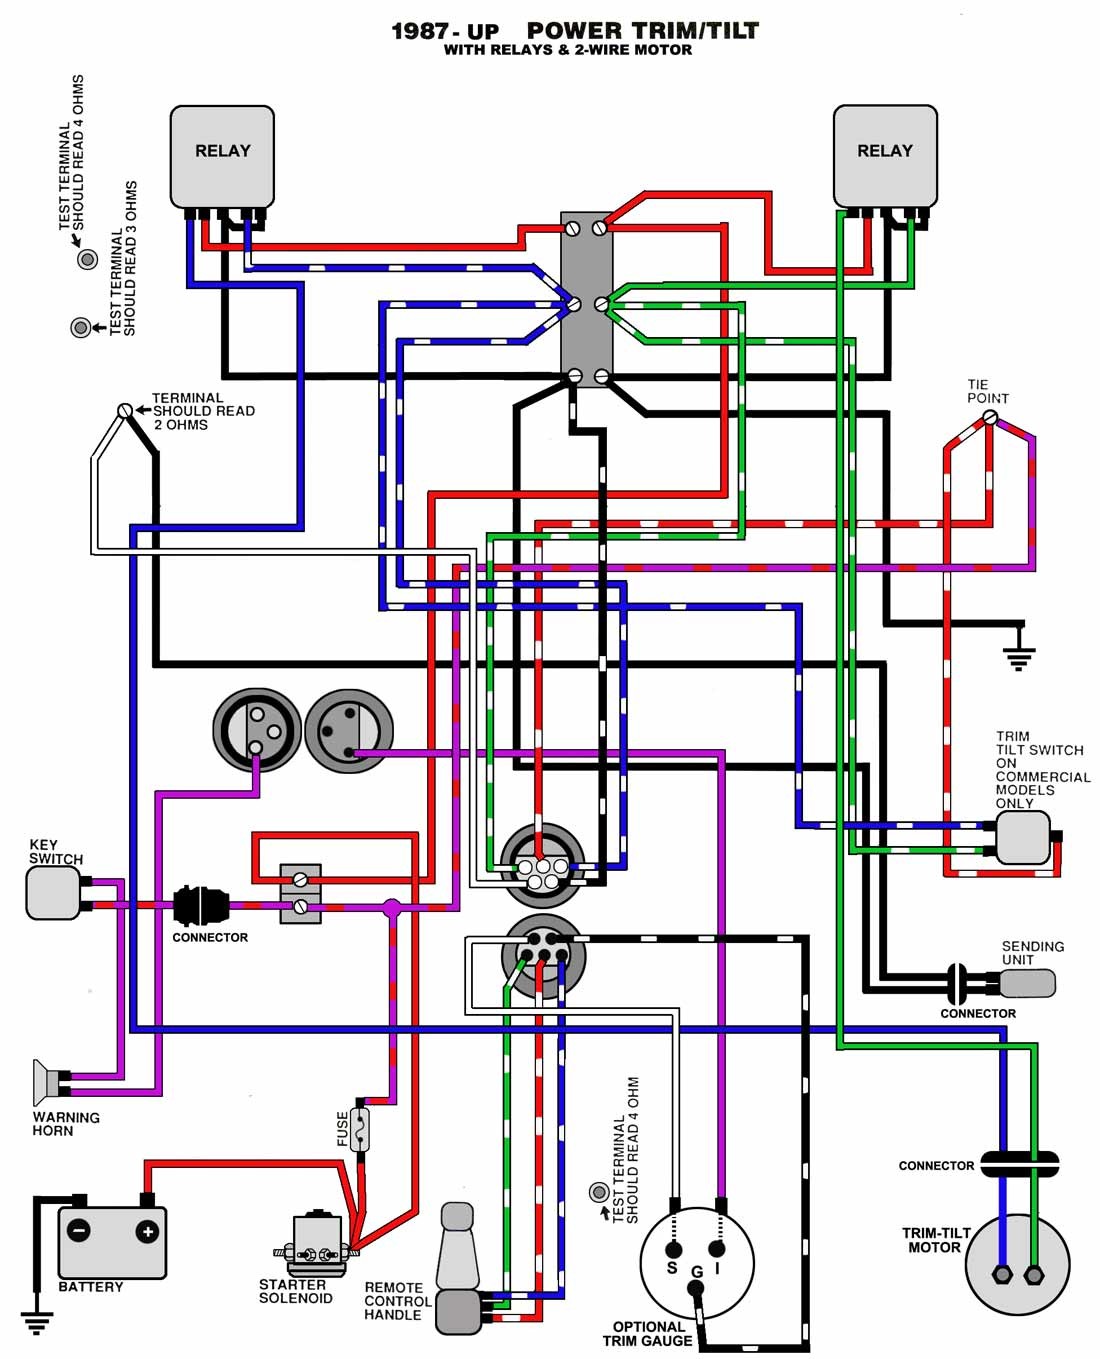 wiring diagram for mercury outboard motor inspirational wiring diagram mercury 115 hp outboard lvcswop prepossessing of wiring diagram for mercury outboard motor